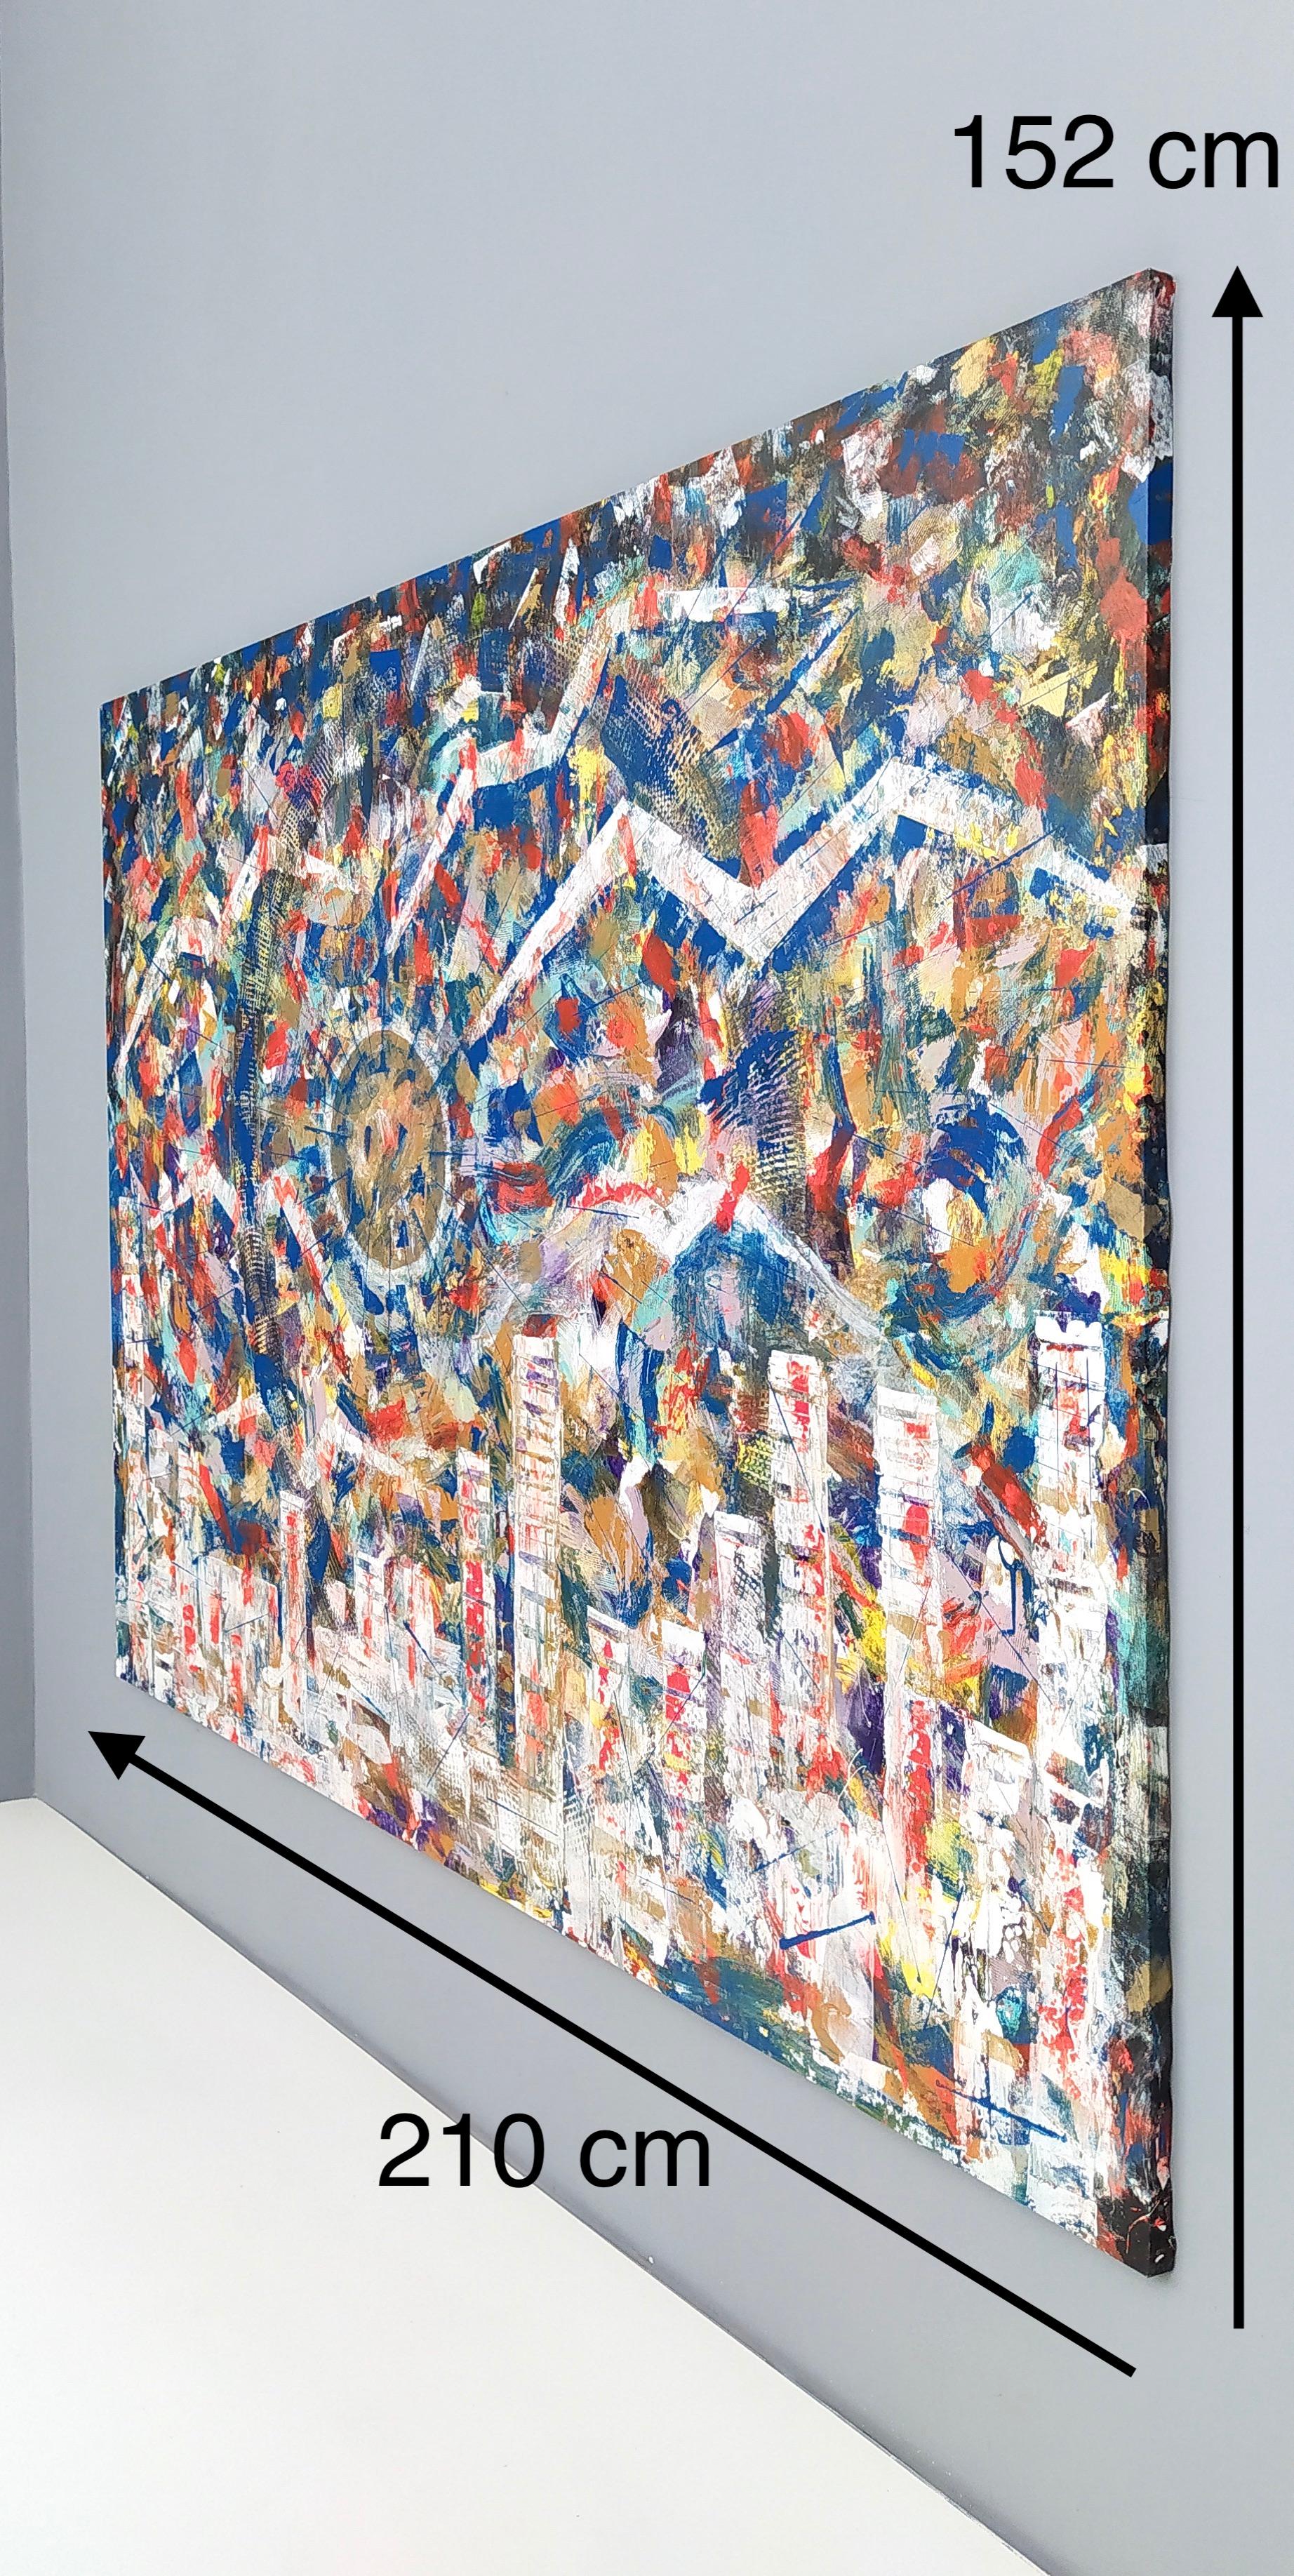 « Paintaggio urbano » d'Enzio Wenk, 2020, acrylique sur toile, néo-expressionnisme  en vente 14